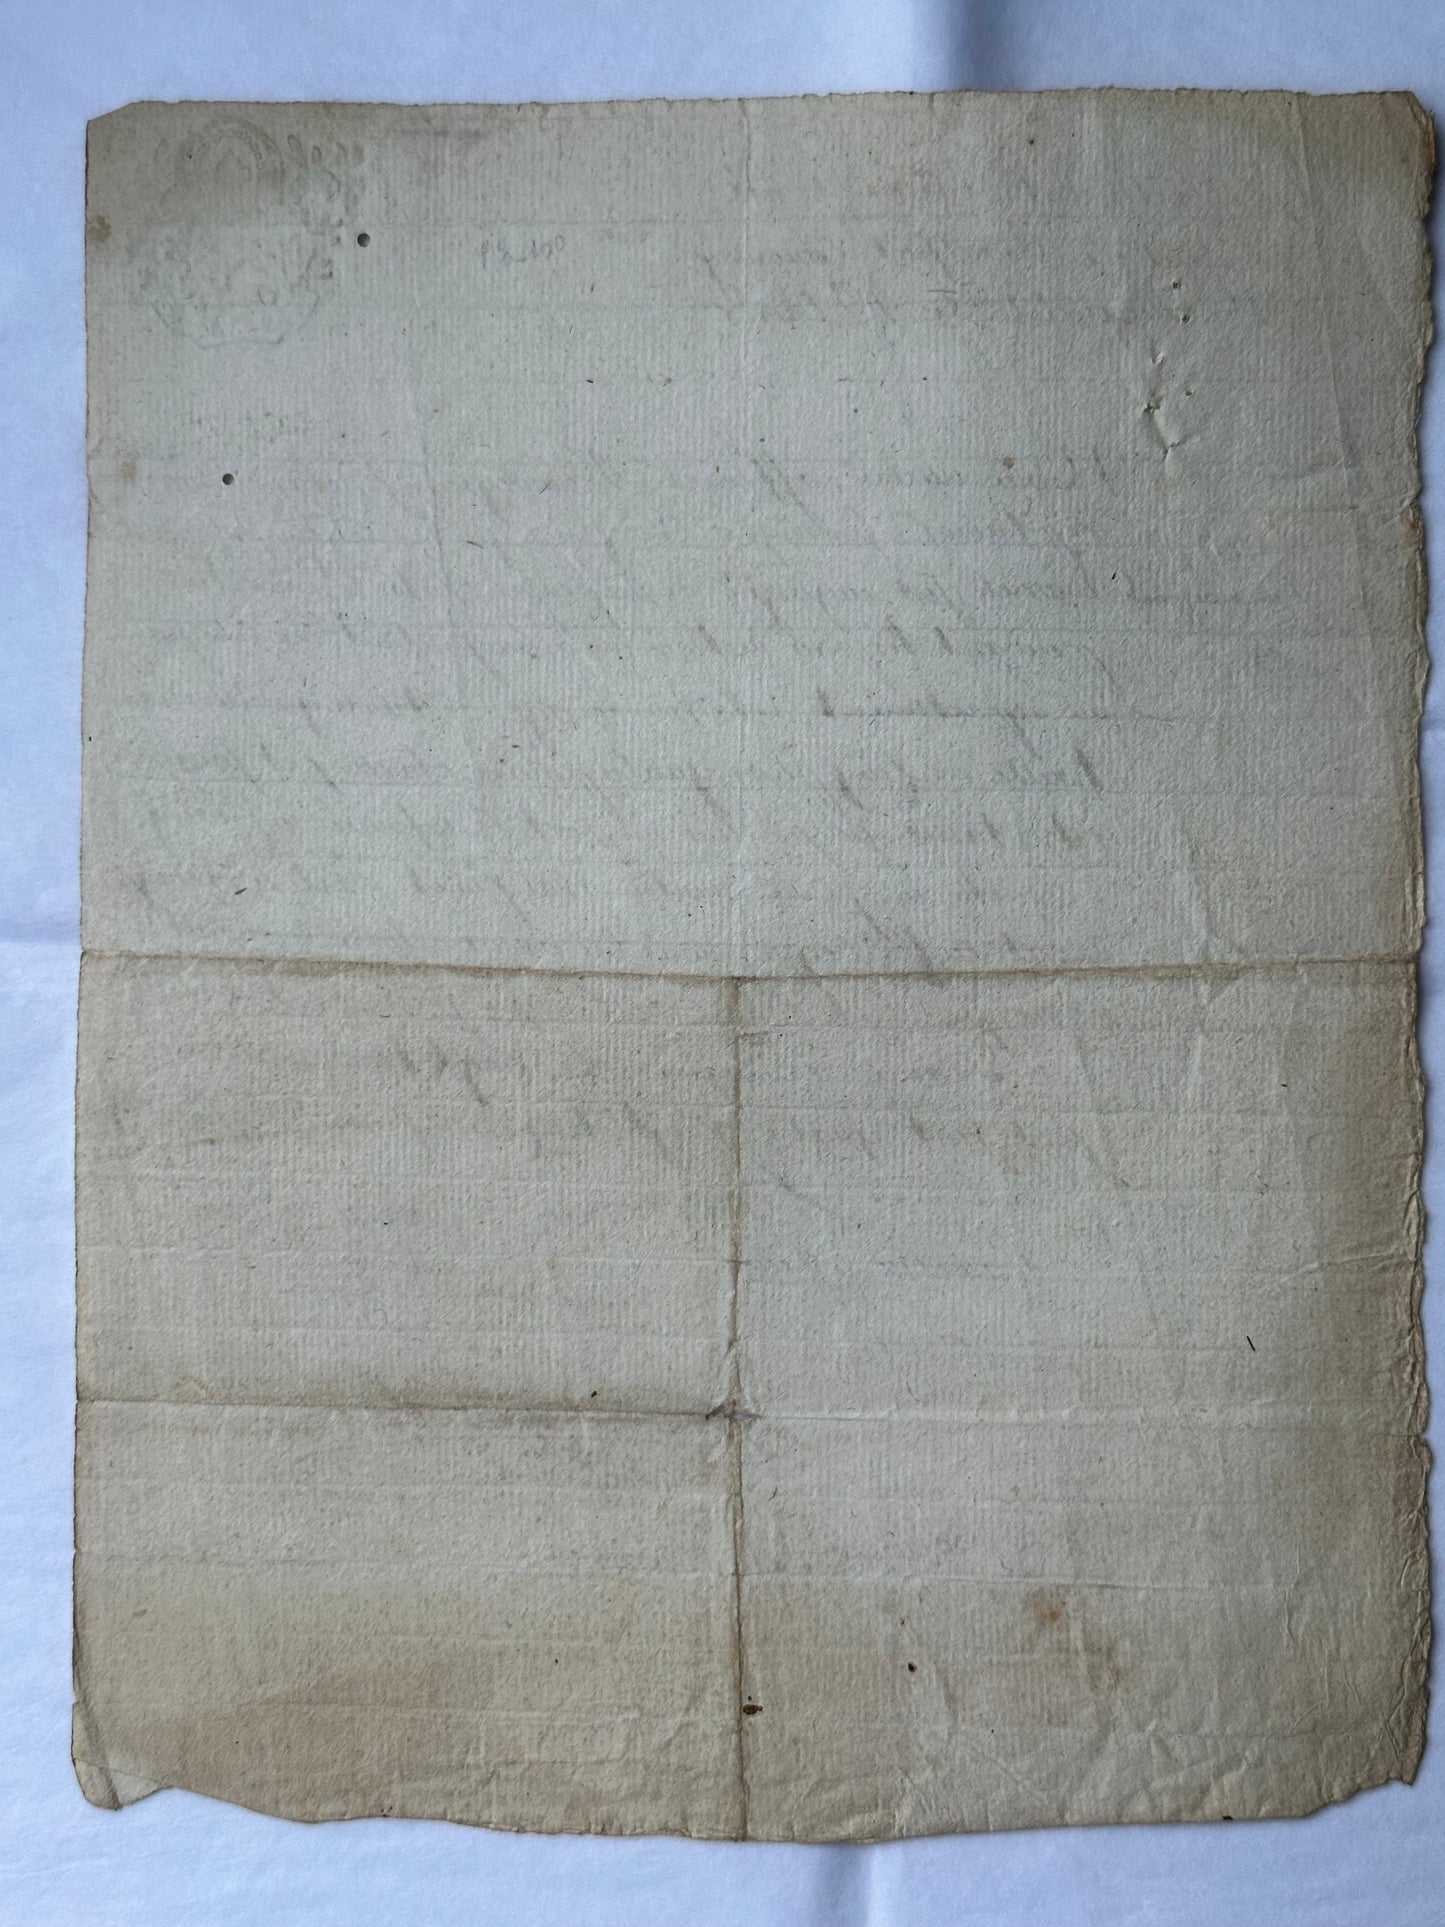 1788 French Legal Manuscript